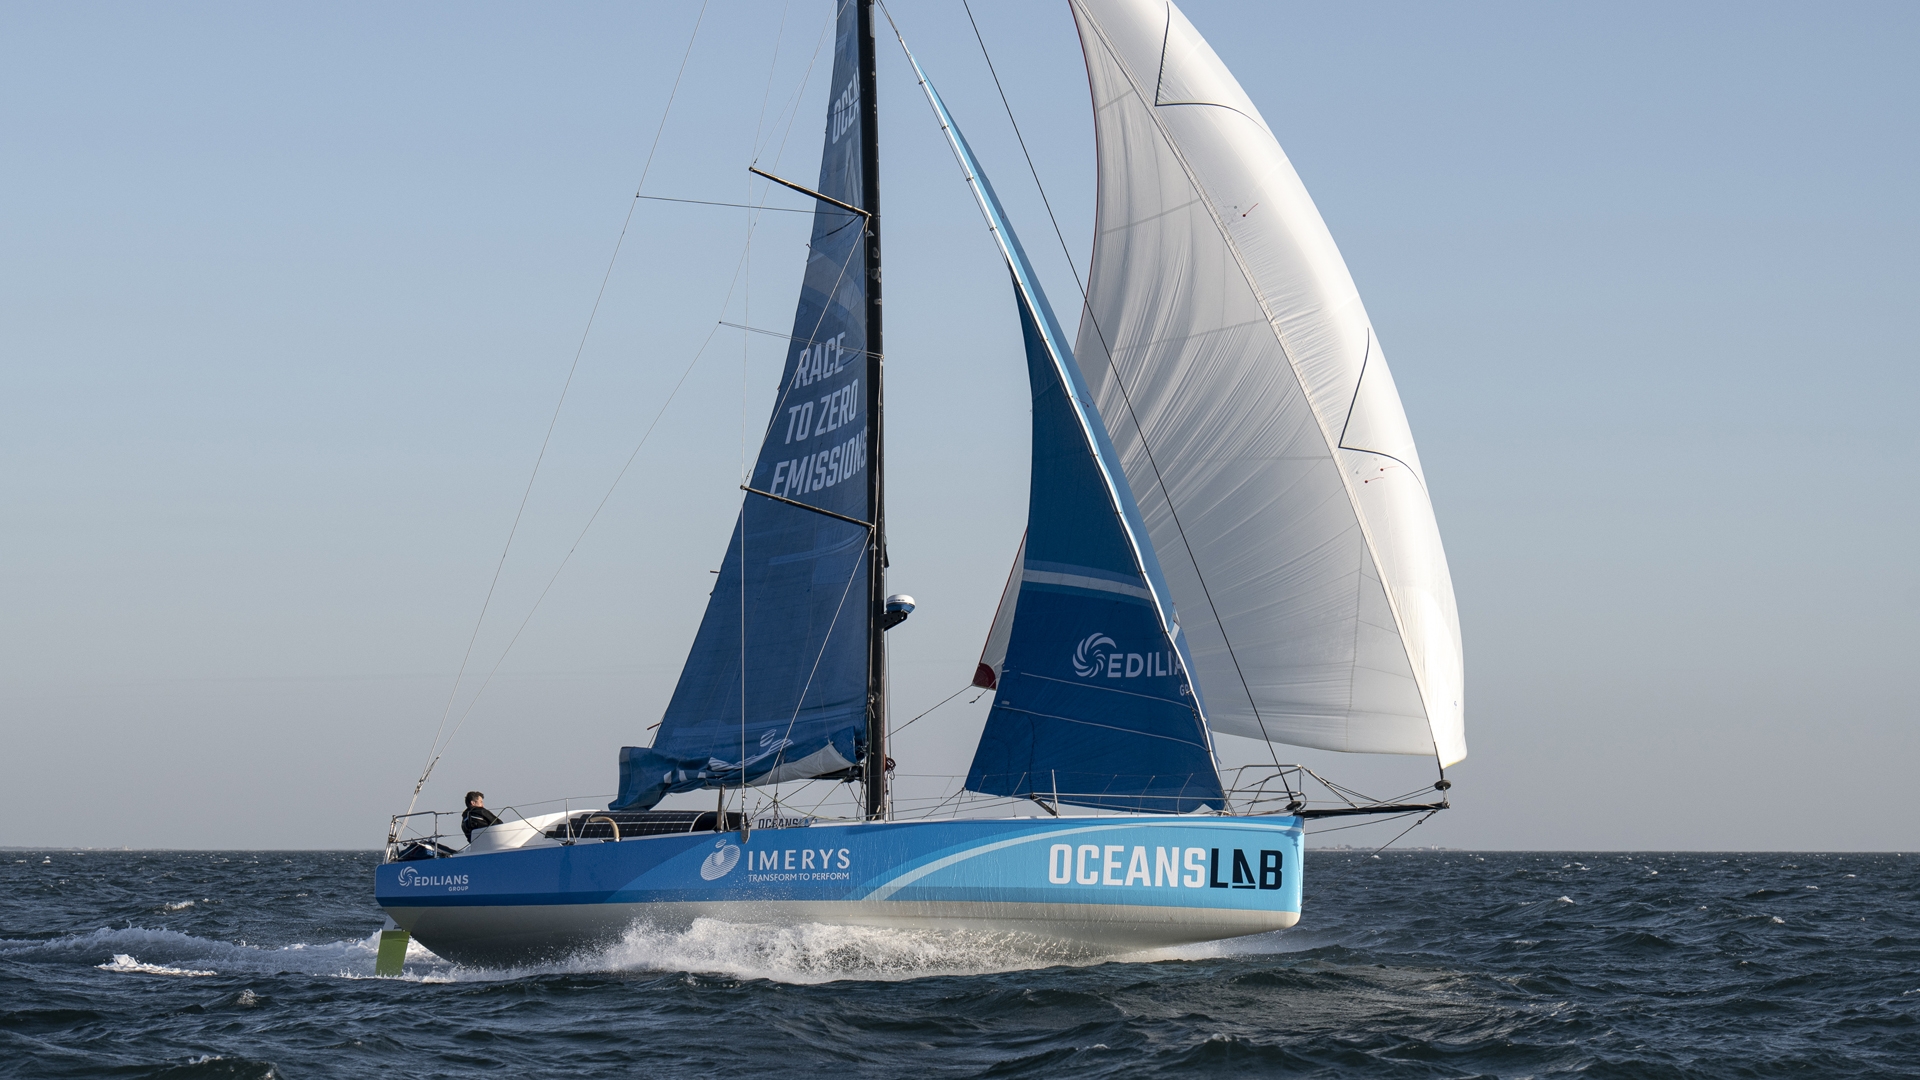 OceansLab - Race to Zero Emissions